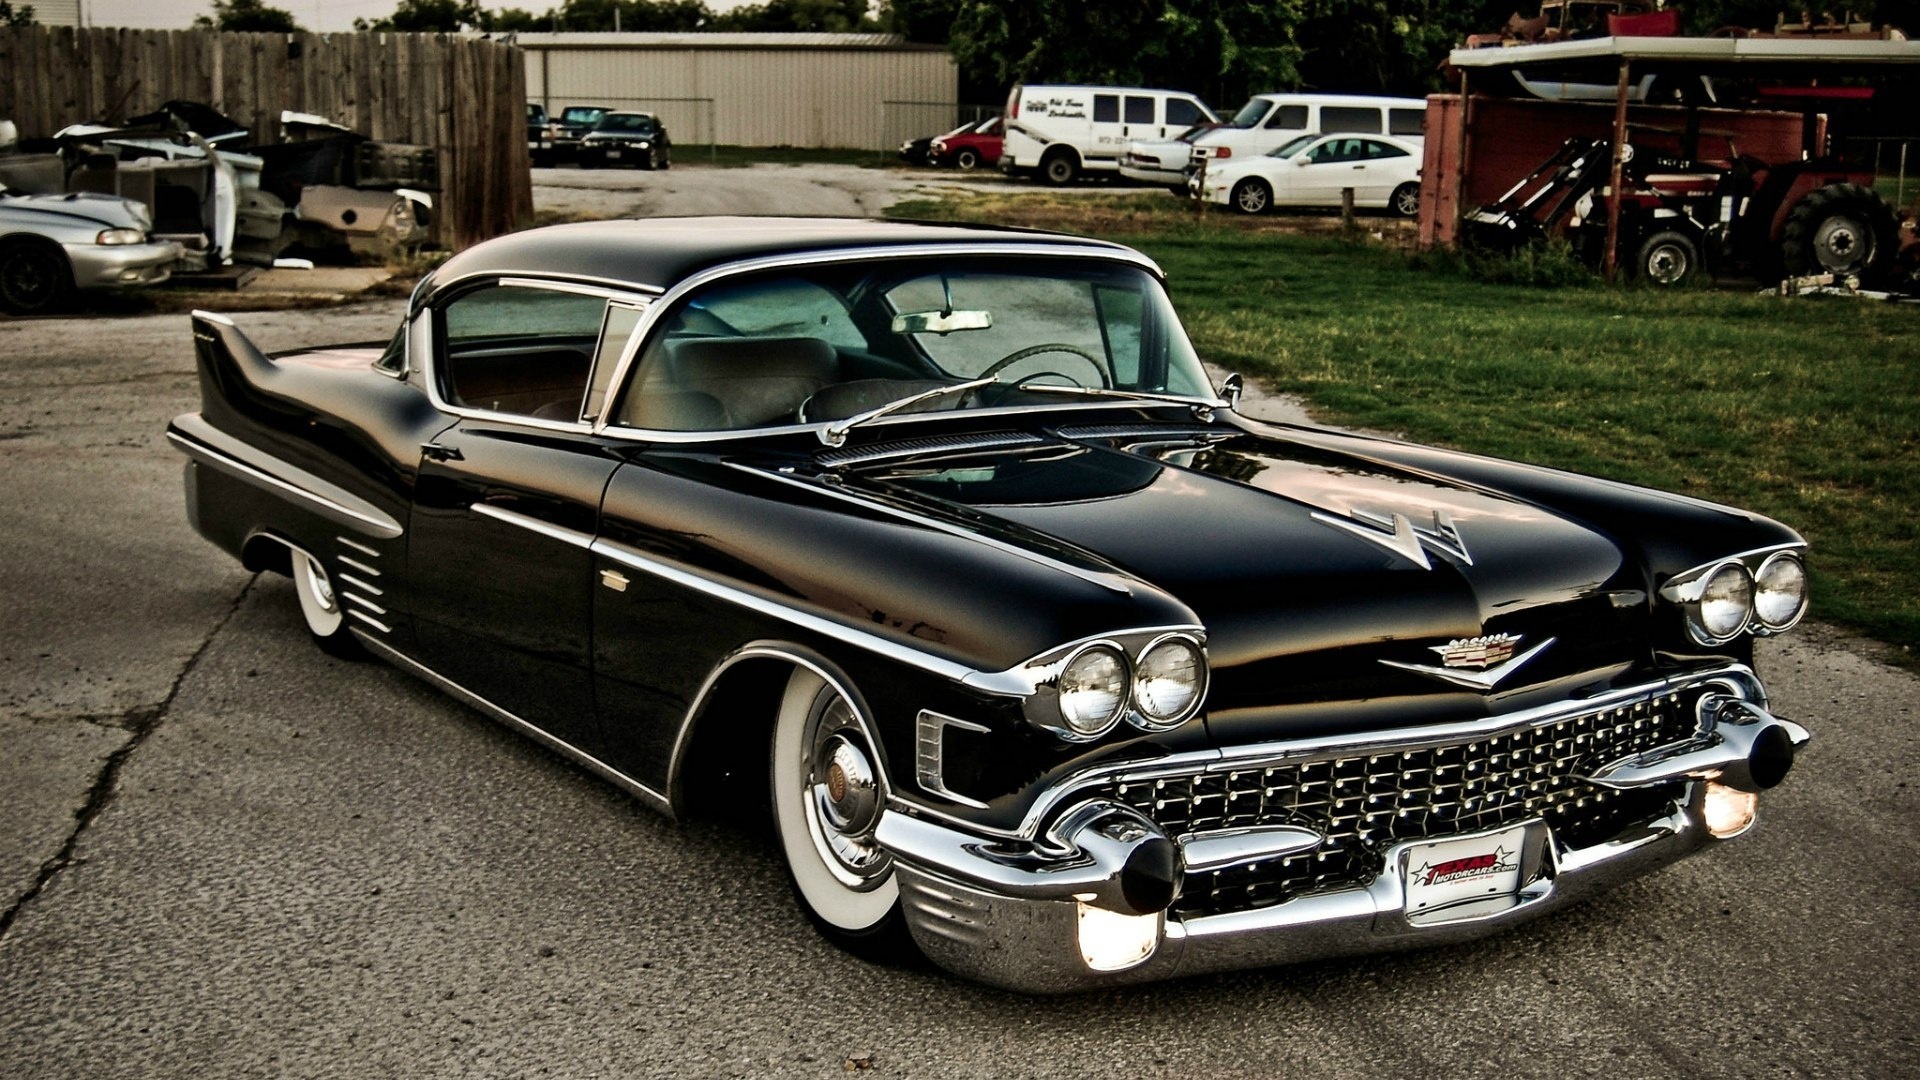 Free photo: Cadillac classic car - American, Metal, Usa ...